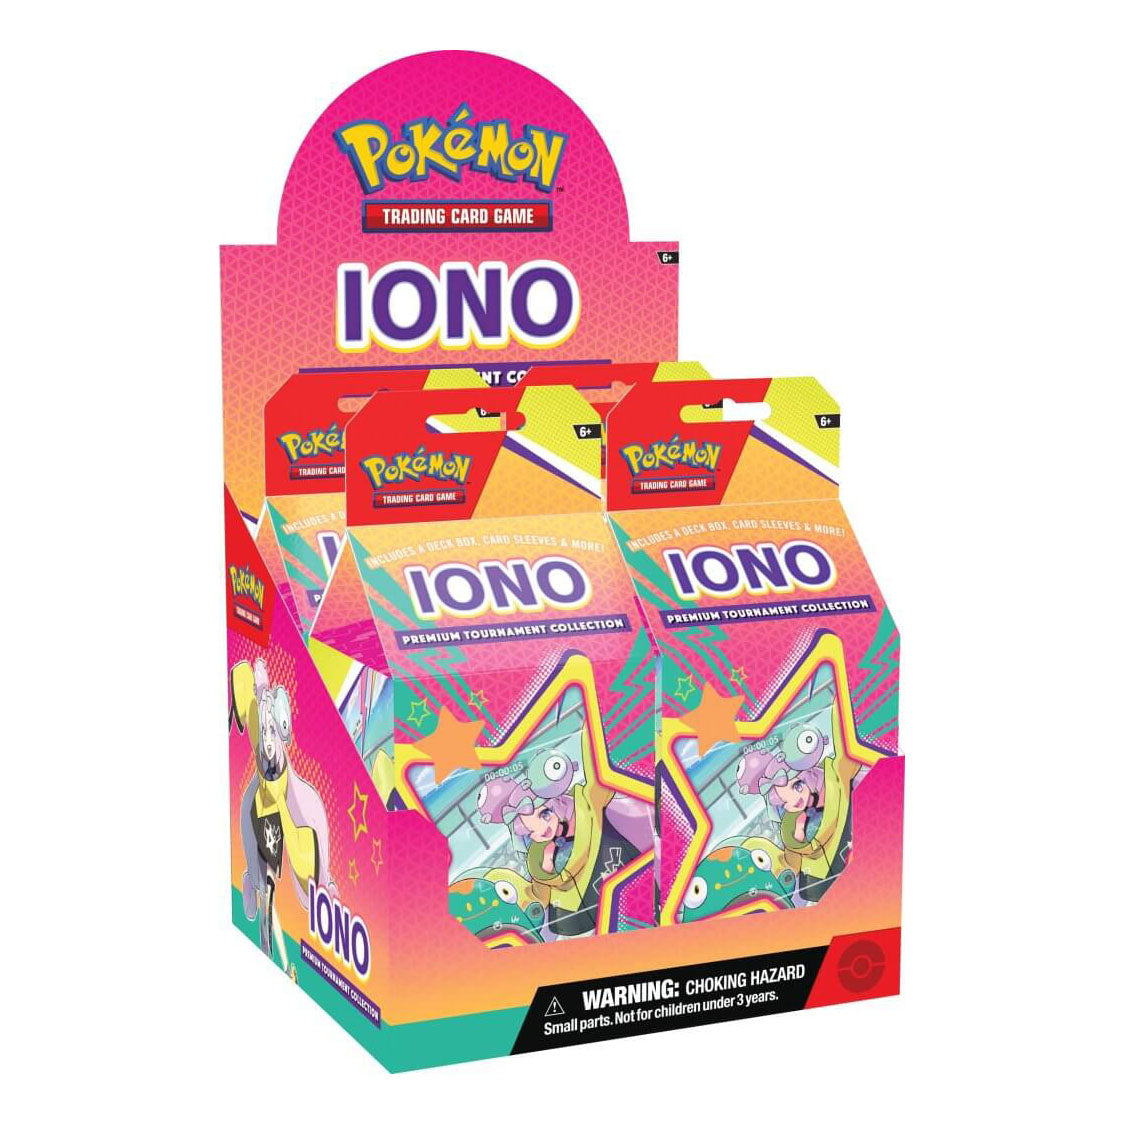 Pokemon TCG - Iono Premium Tournament Collection